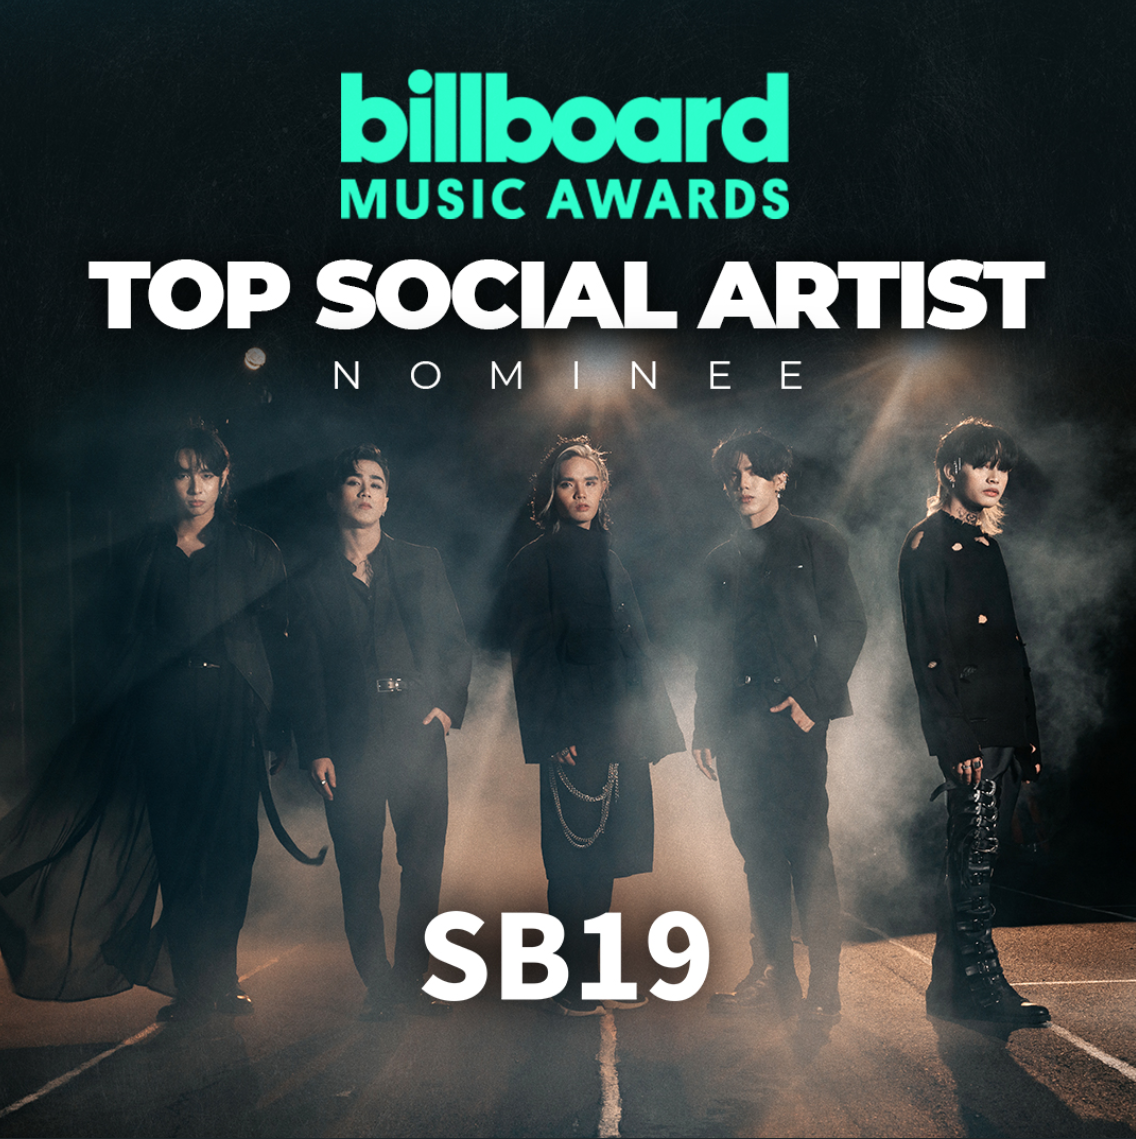 SB19 makes history with Billboard Music Awards nomination